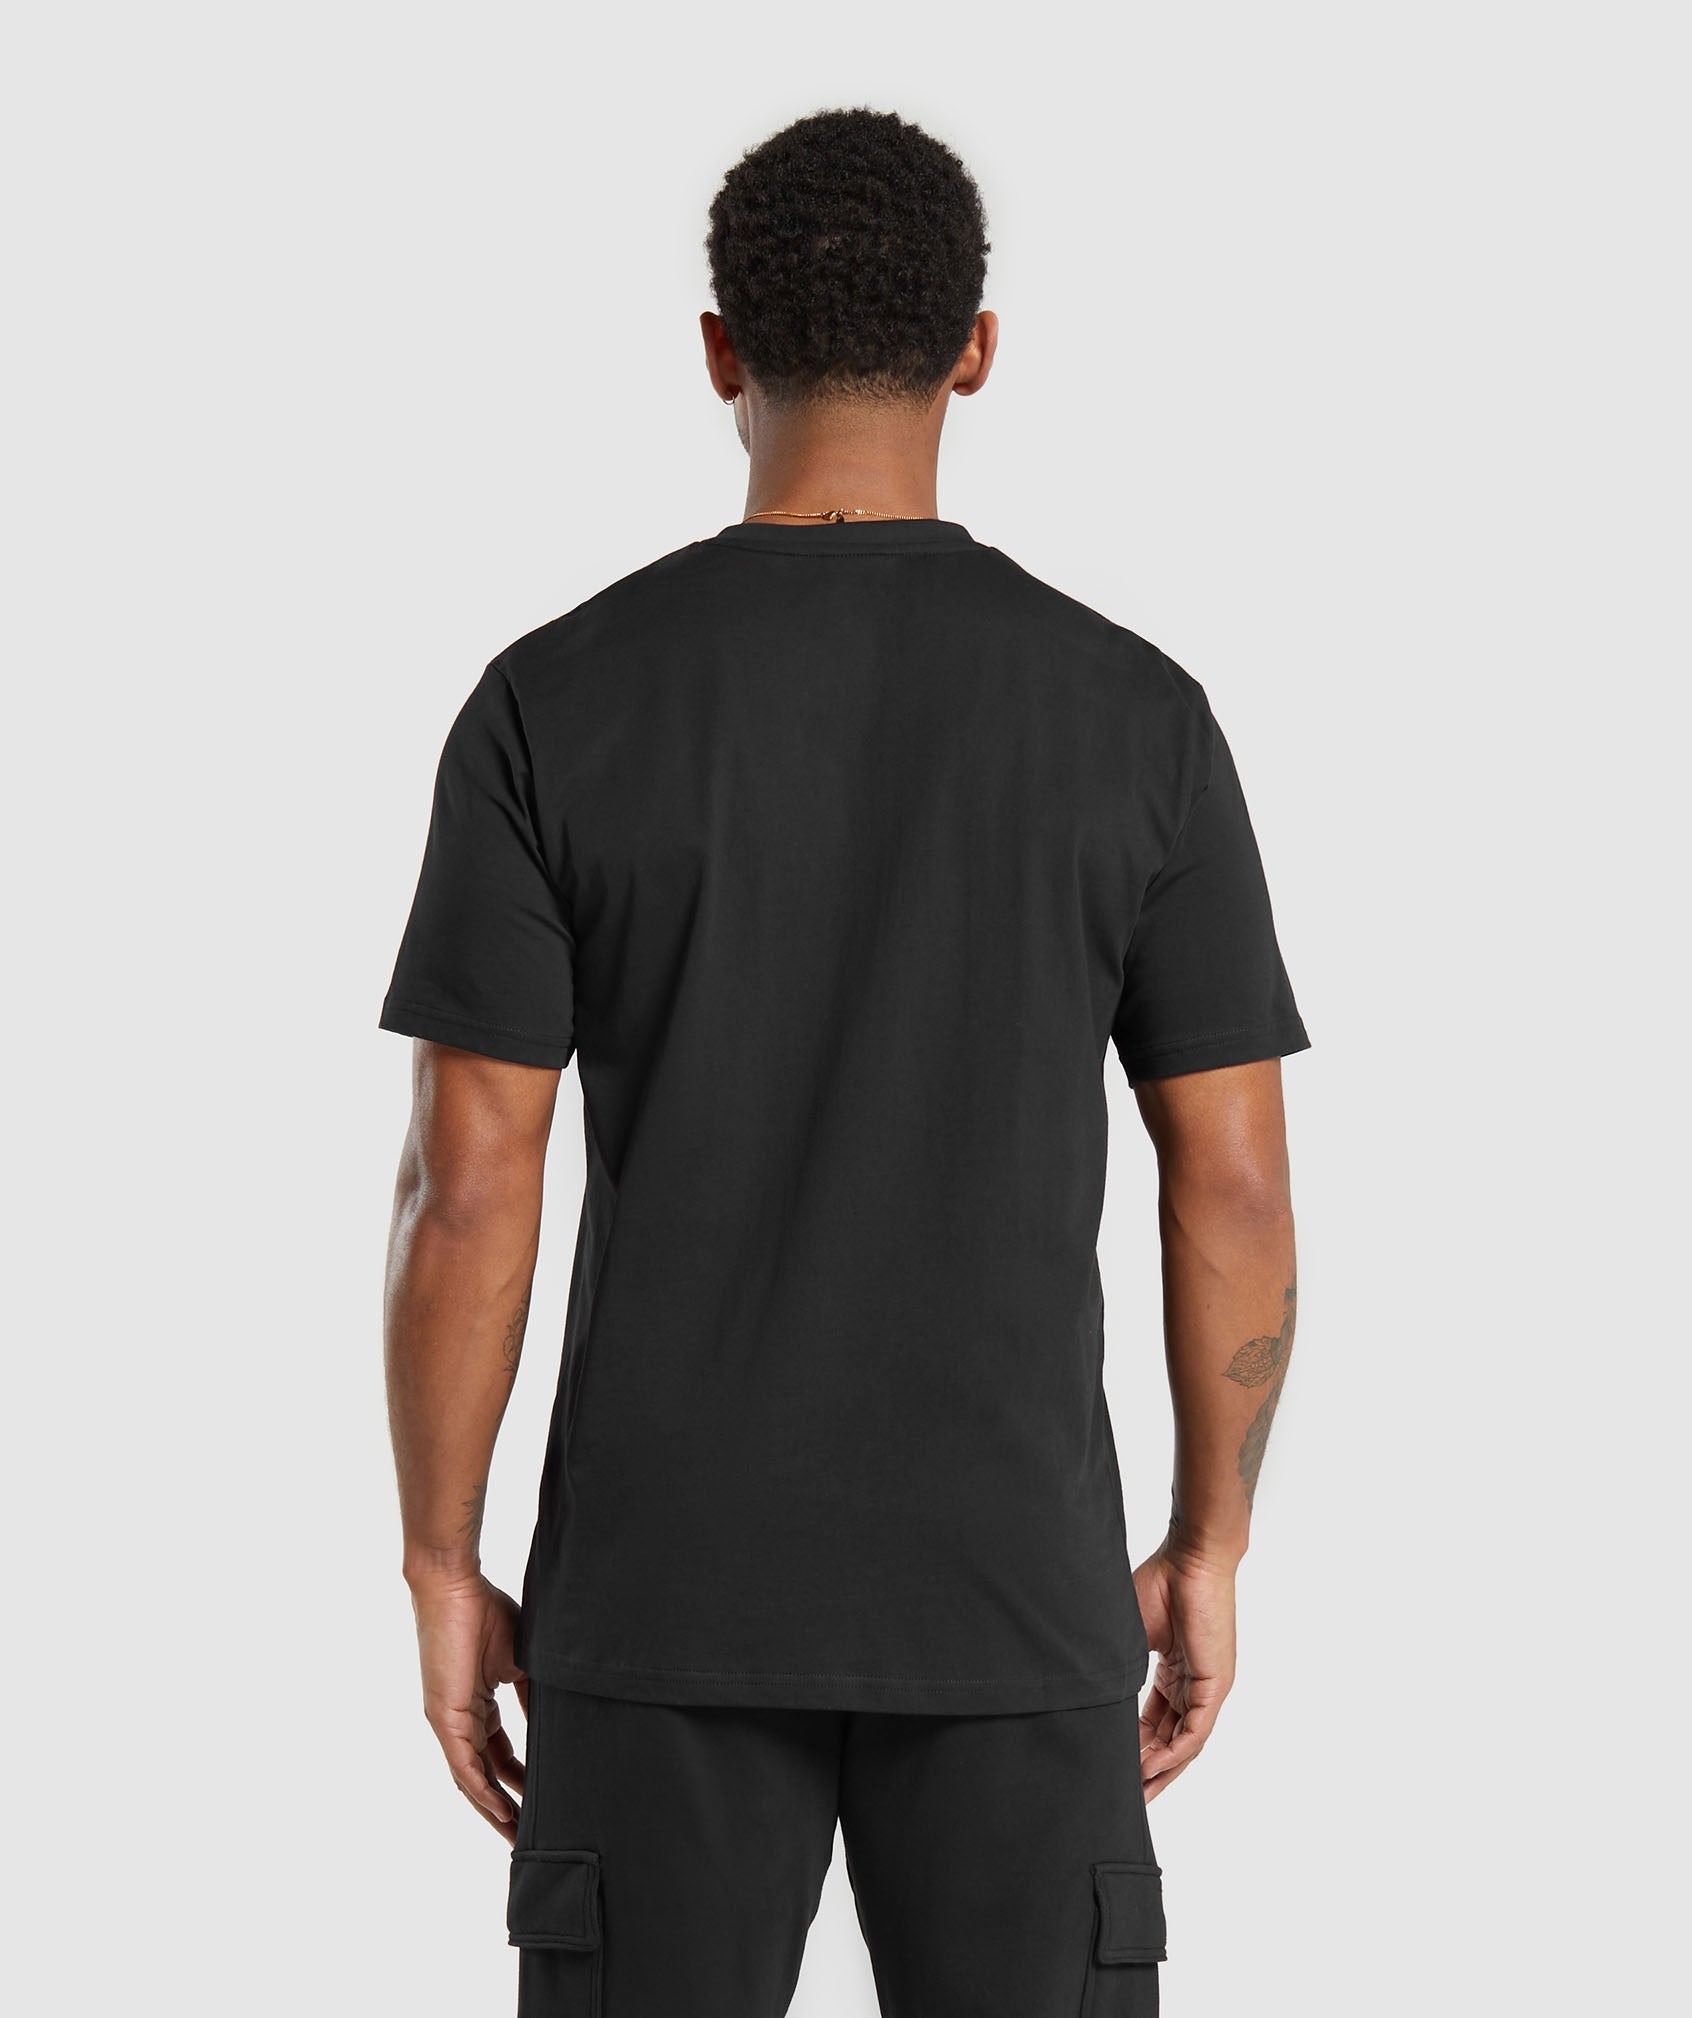 Crest V-Neck T Shirt in Black - view 2